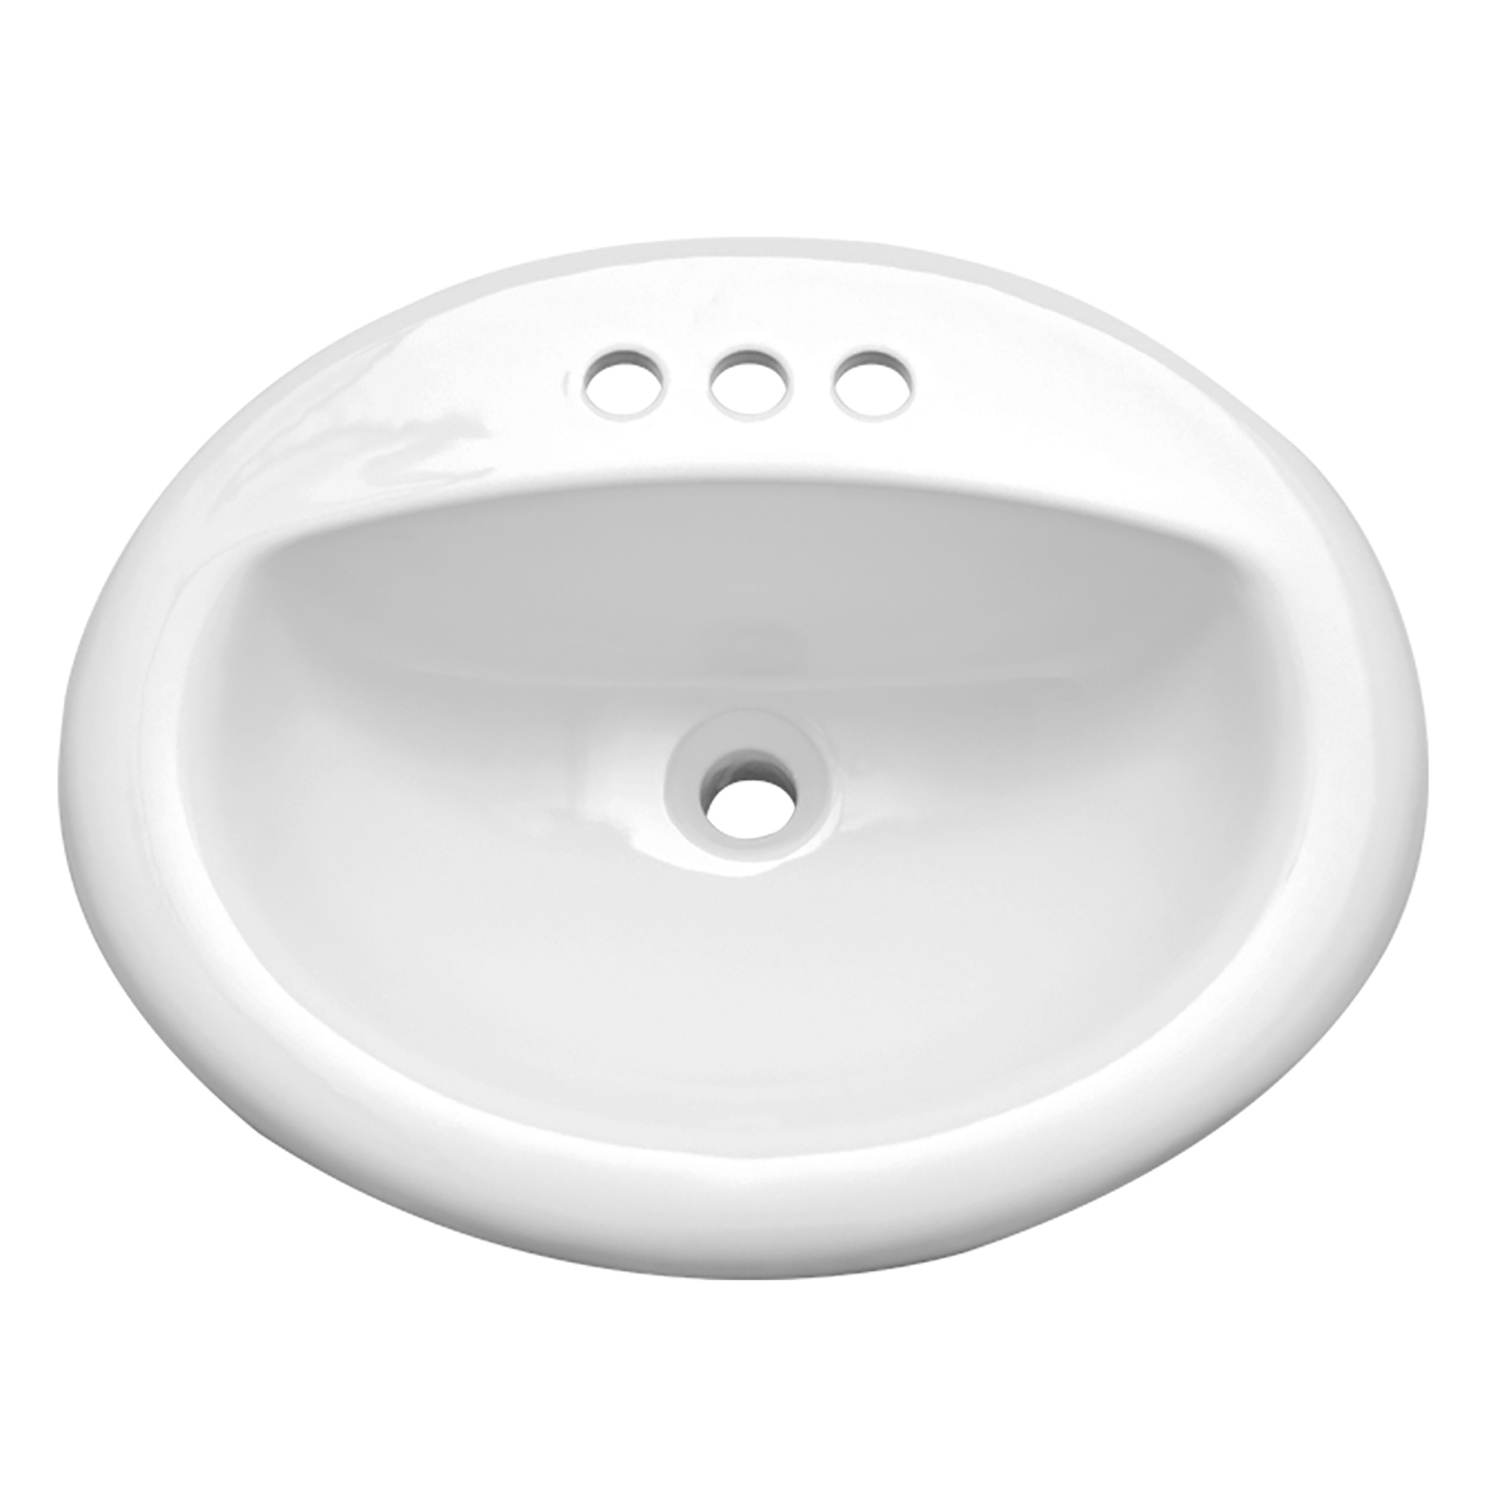 Duko C273 20" x 17" White Oval Ceramic Bathroom Vanity Drop in Sink